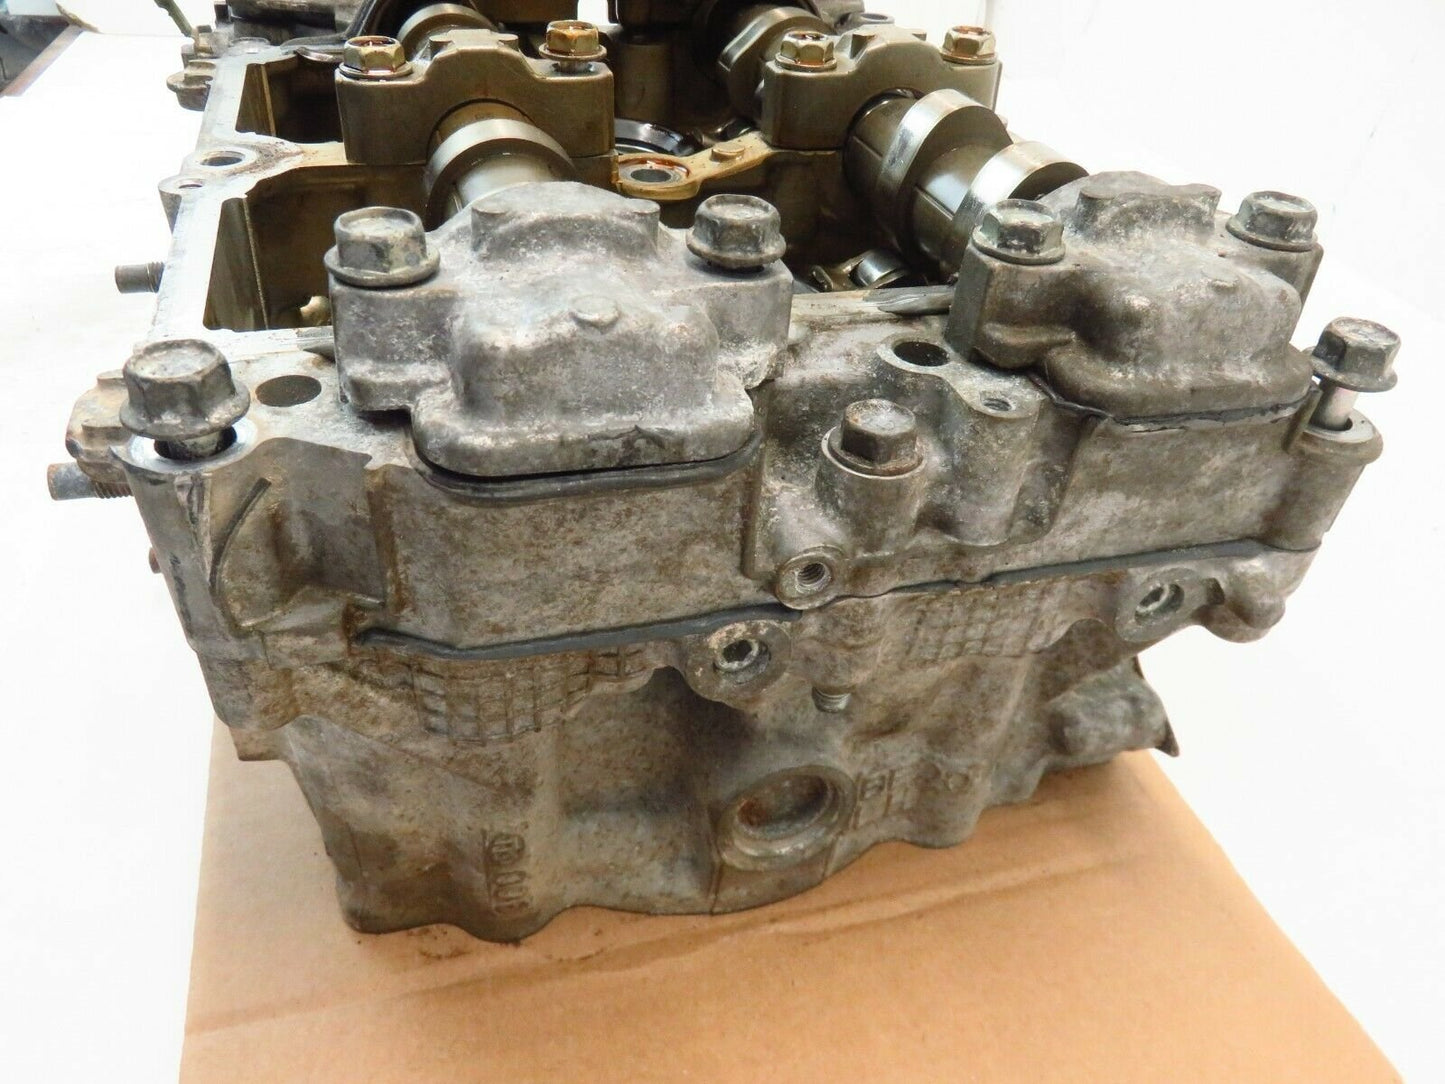 2015-2017 Subaru Crosstrek Driver Cylinder Head Assembly Engine LH 15 16 17